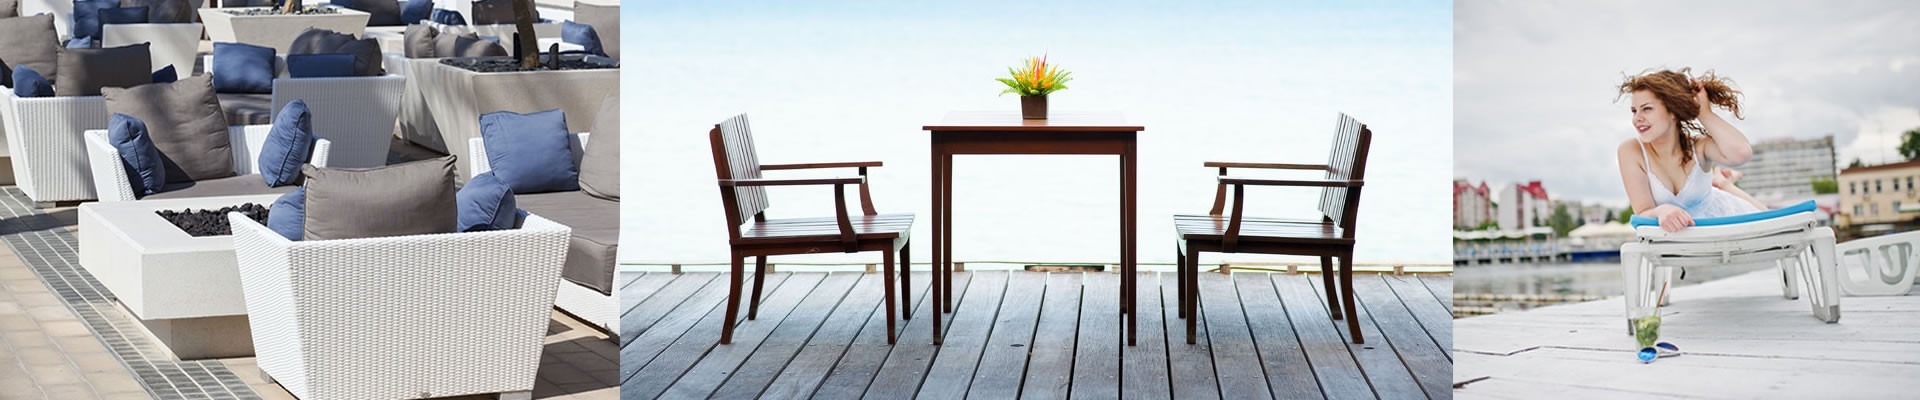 Garden | Garden Chairs, Tables & Patio Furniture